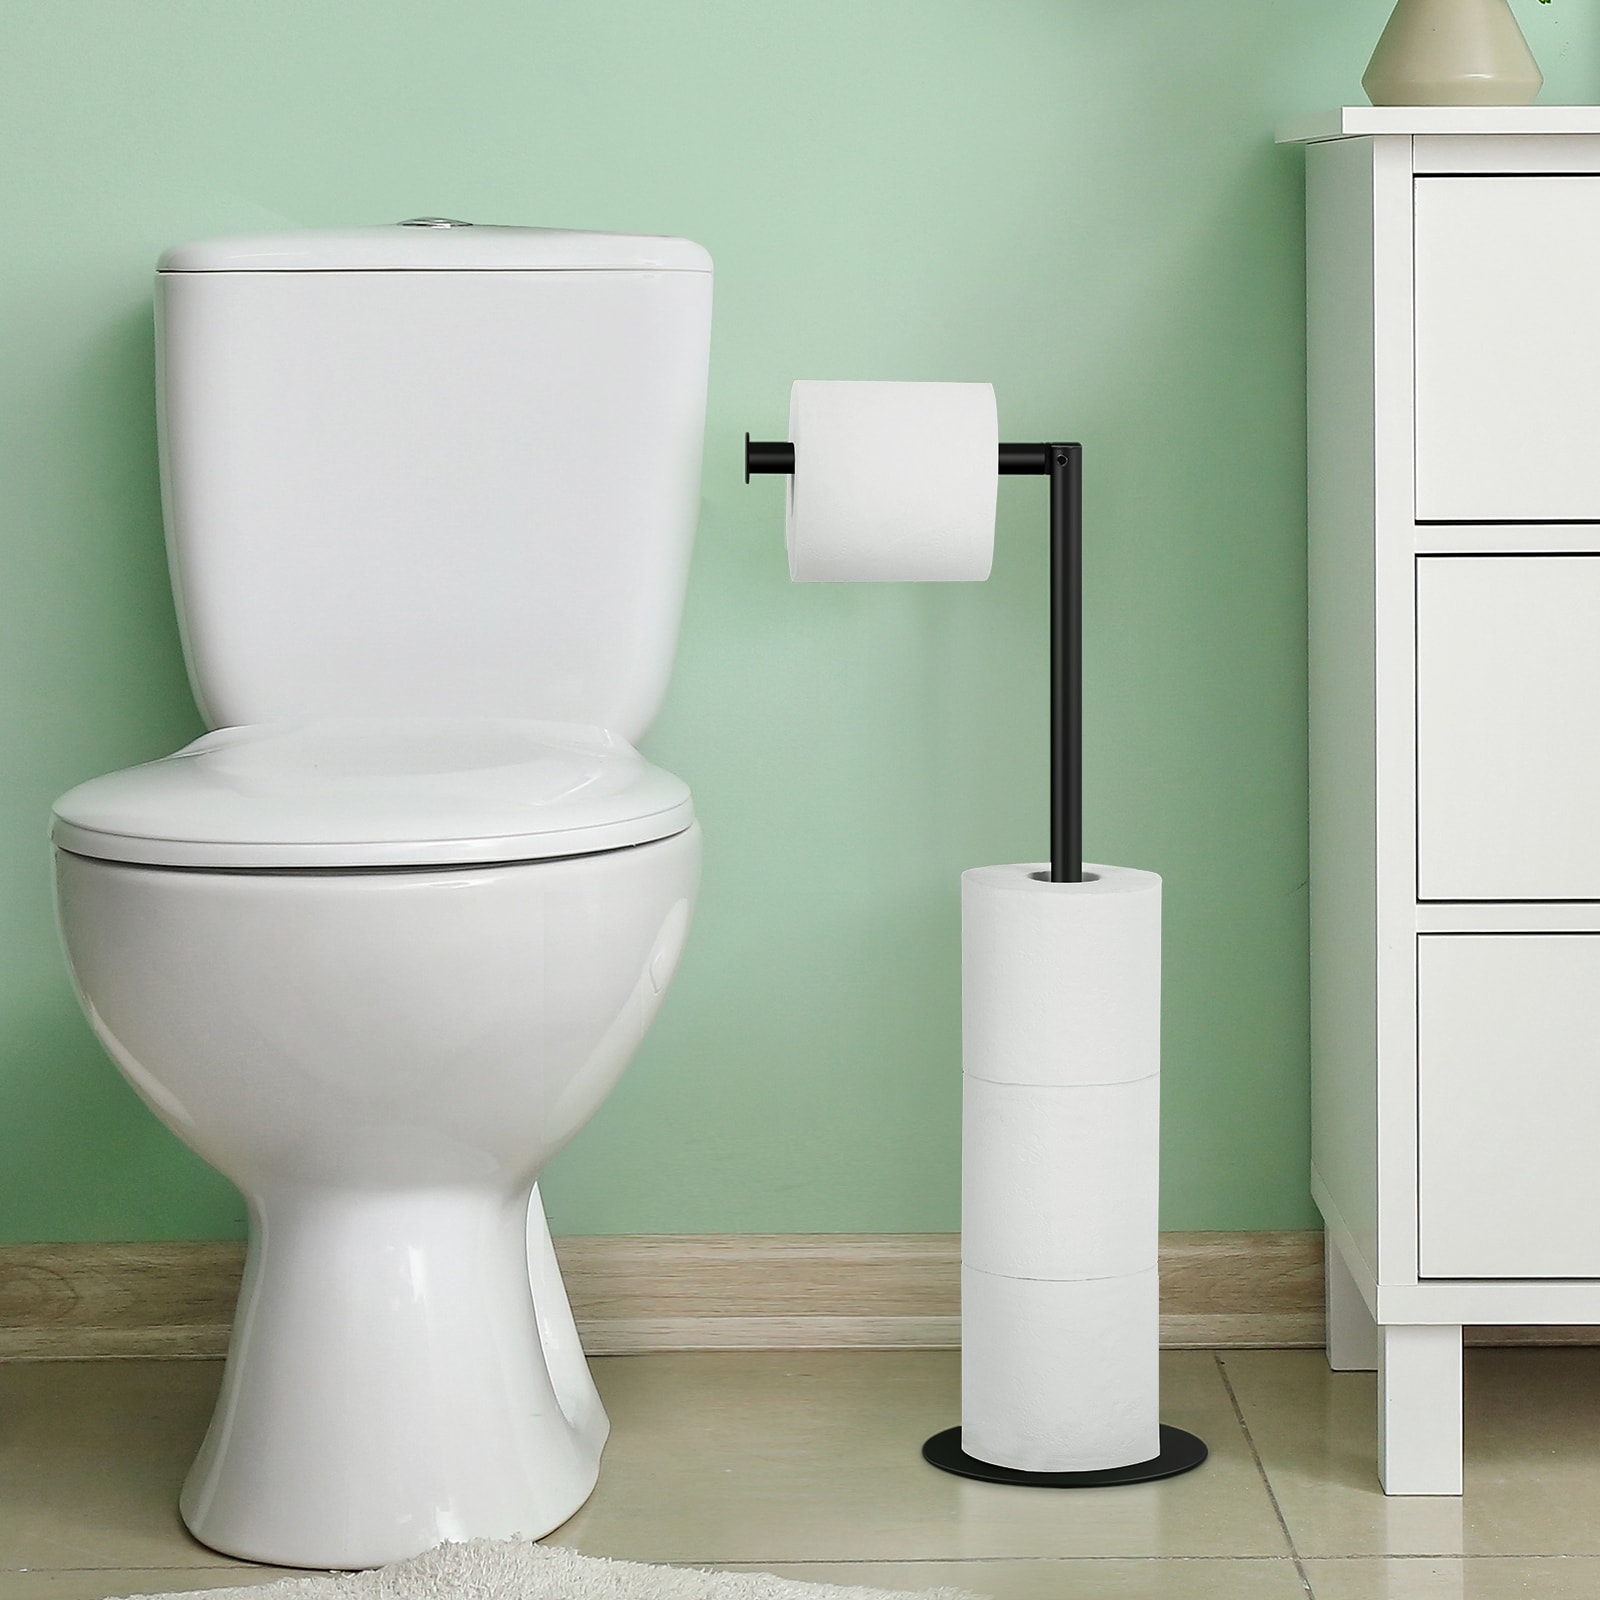 Toilet Paper Holder Stand,Chrome Toilet Paper Holder Behind Toilet Storage  for Restroom Cabinet,Bathroom Stand with Toilet Paper Holder Insert,Slim